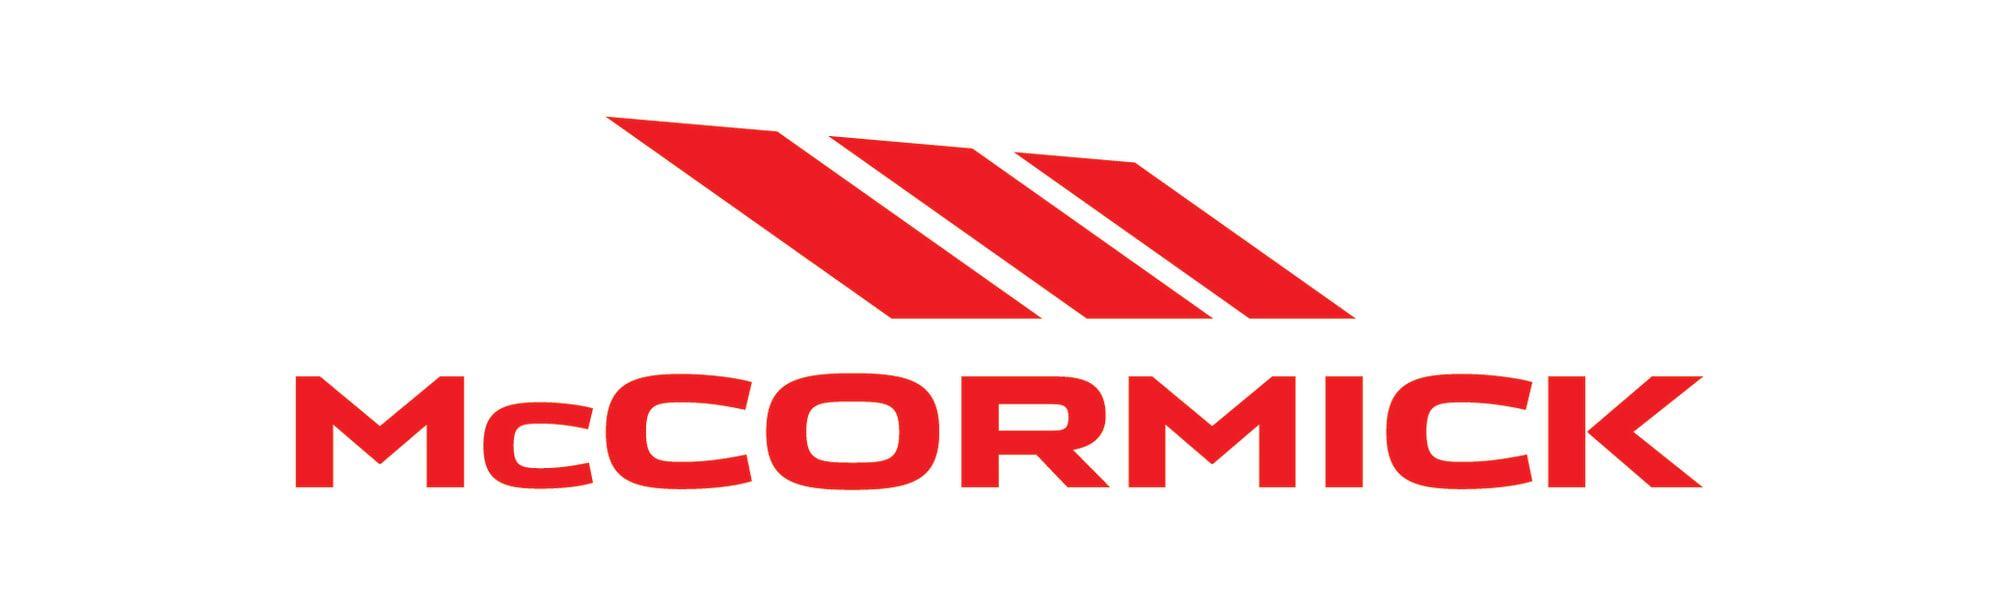 McCormick Logo - NEW LOGO DESIGN FOR McCORMICK - McCormick